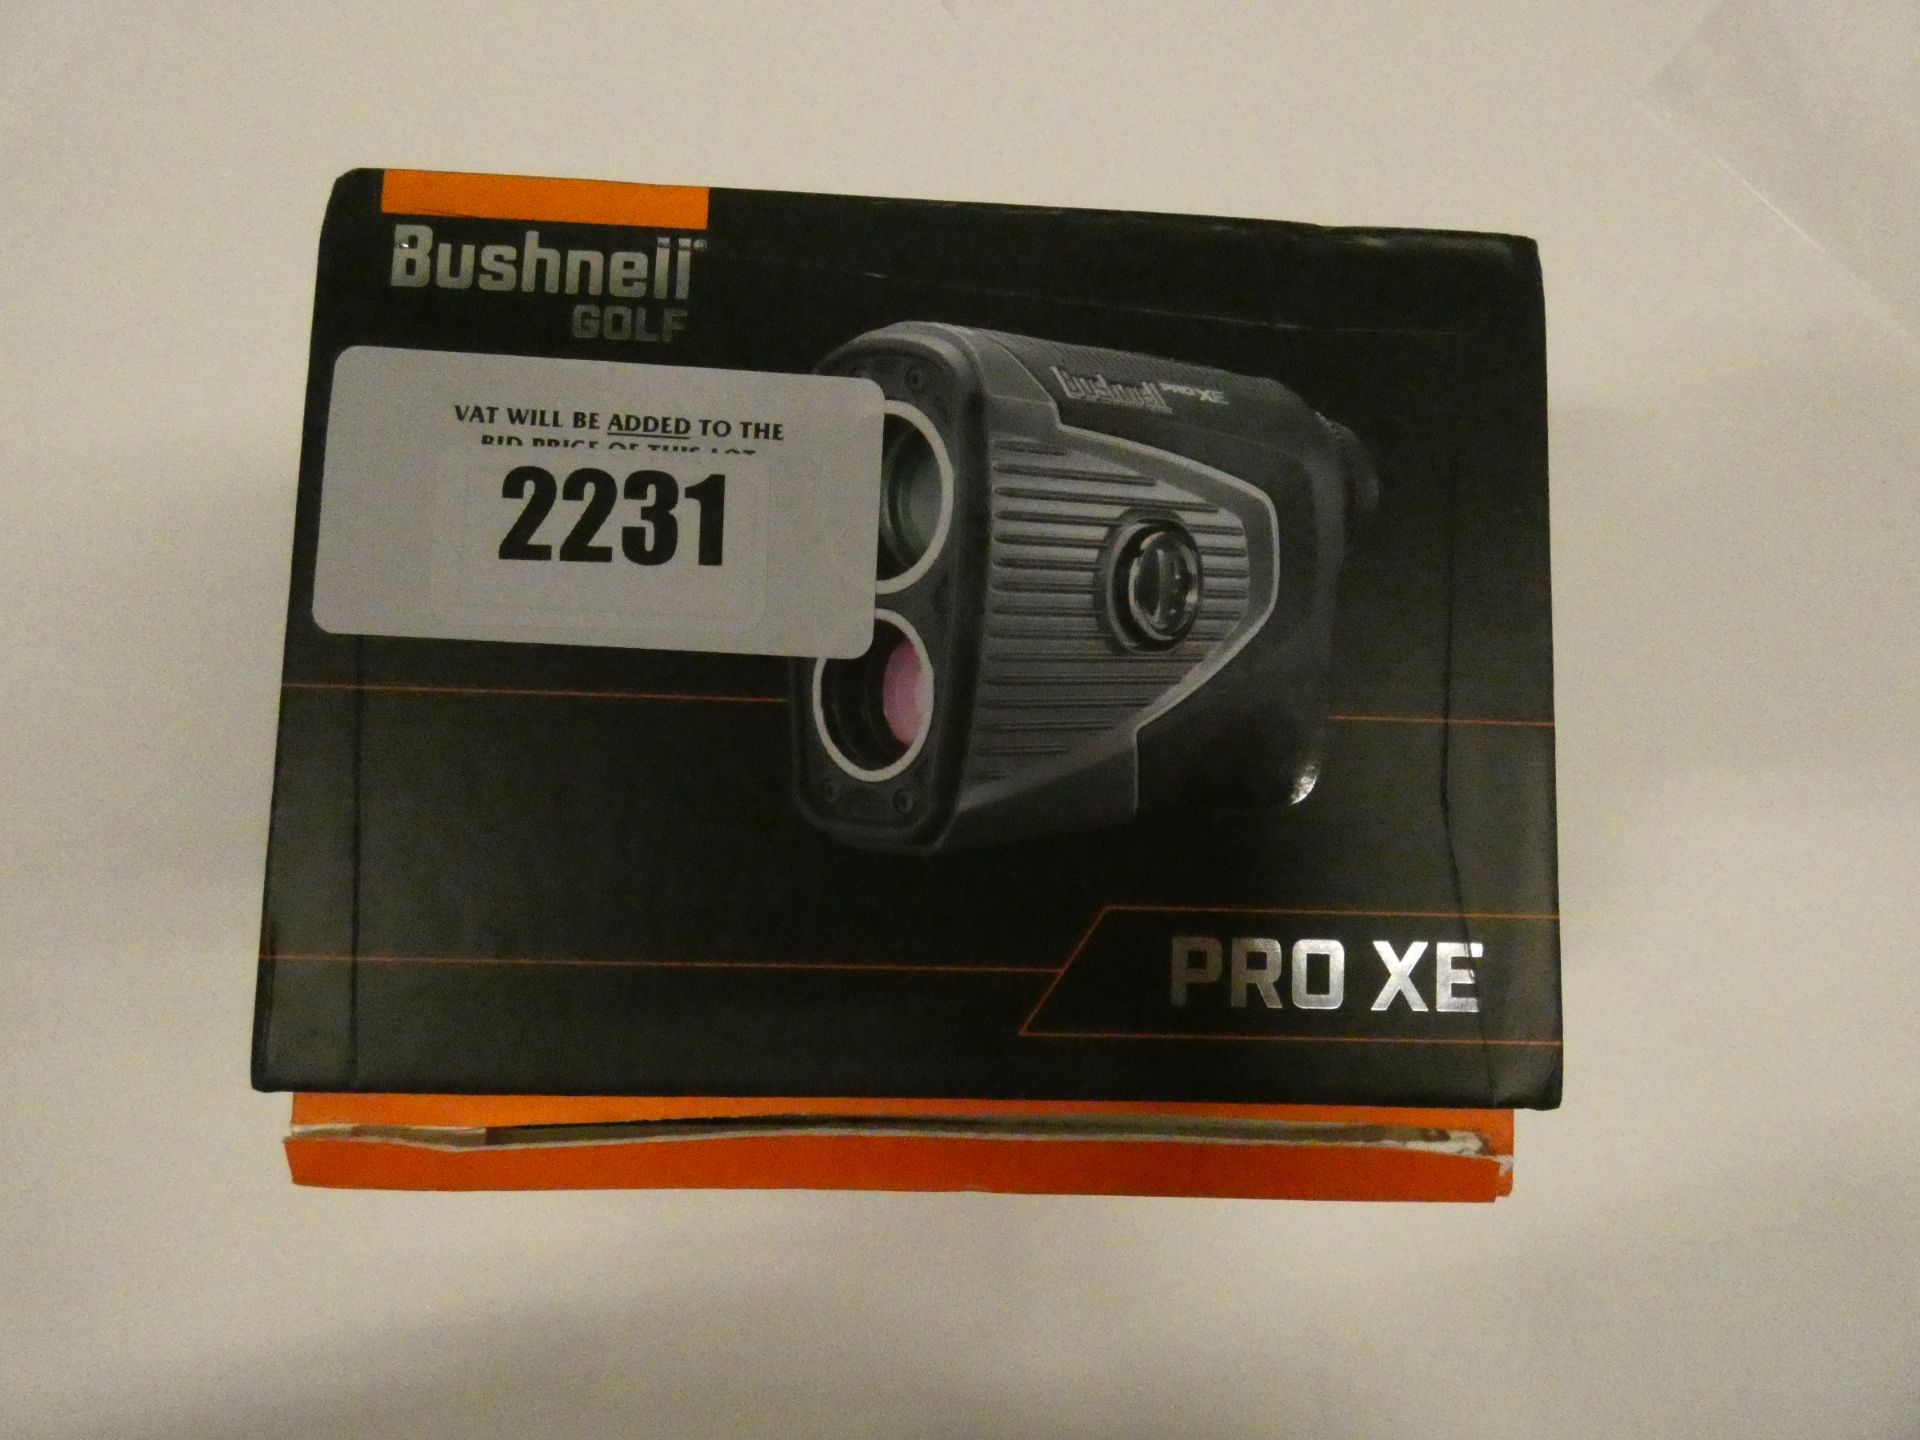 Bushnell Golf Pro XE rangefinder